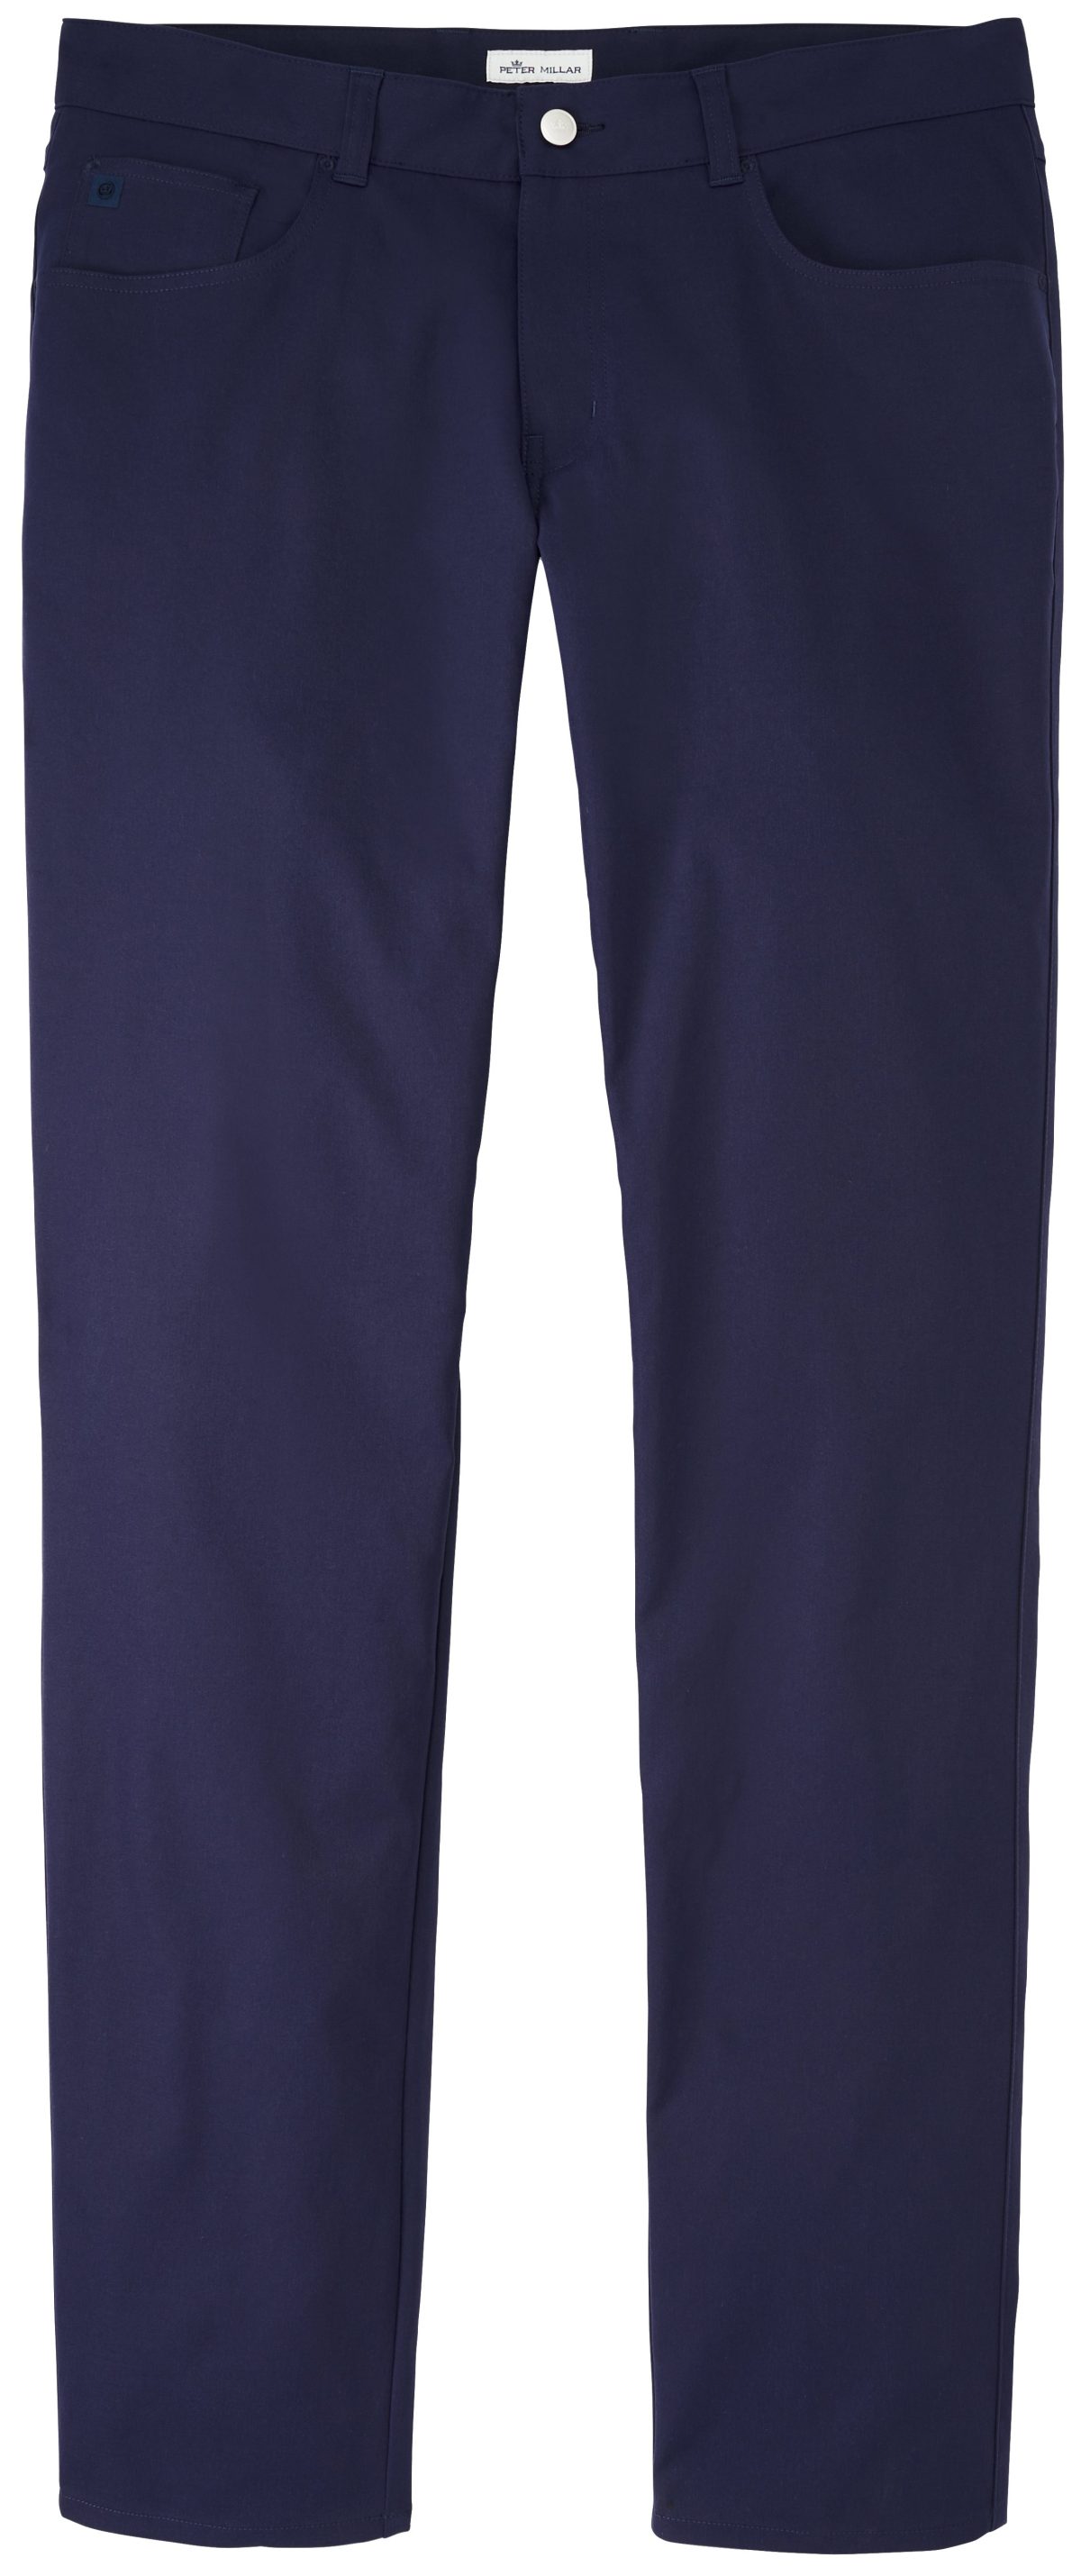 Peter Millar Men's Eb66 Perf 5 Pocket Pant, 100% Polyester in Navy, Size 30x30